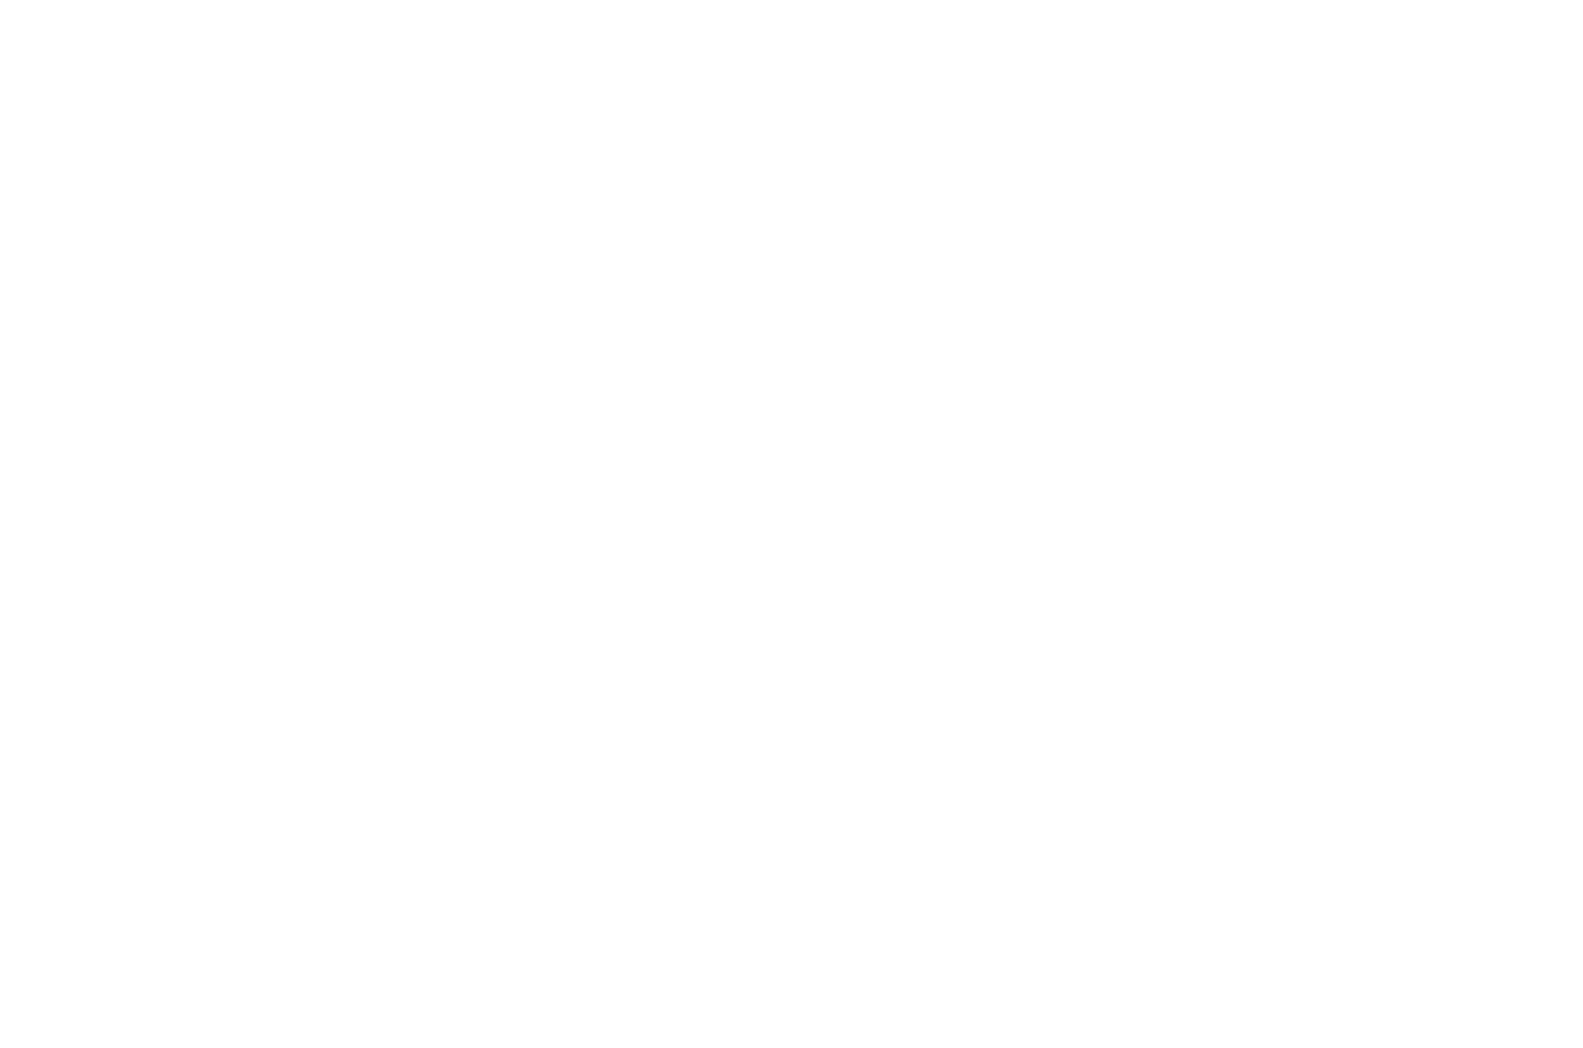 Foods_logo-07.png